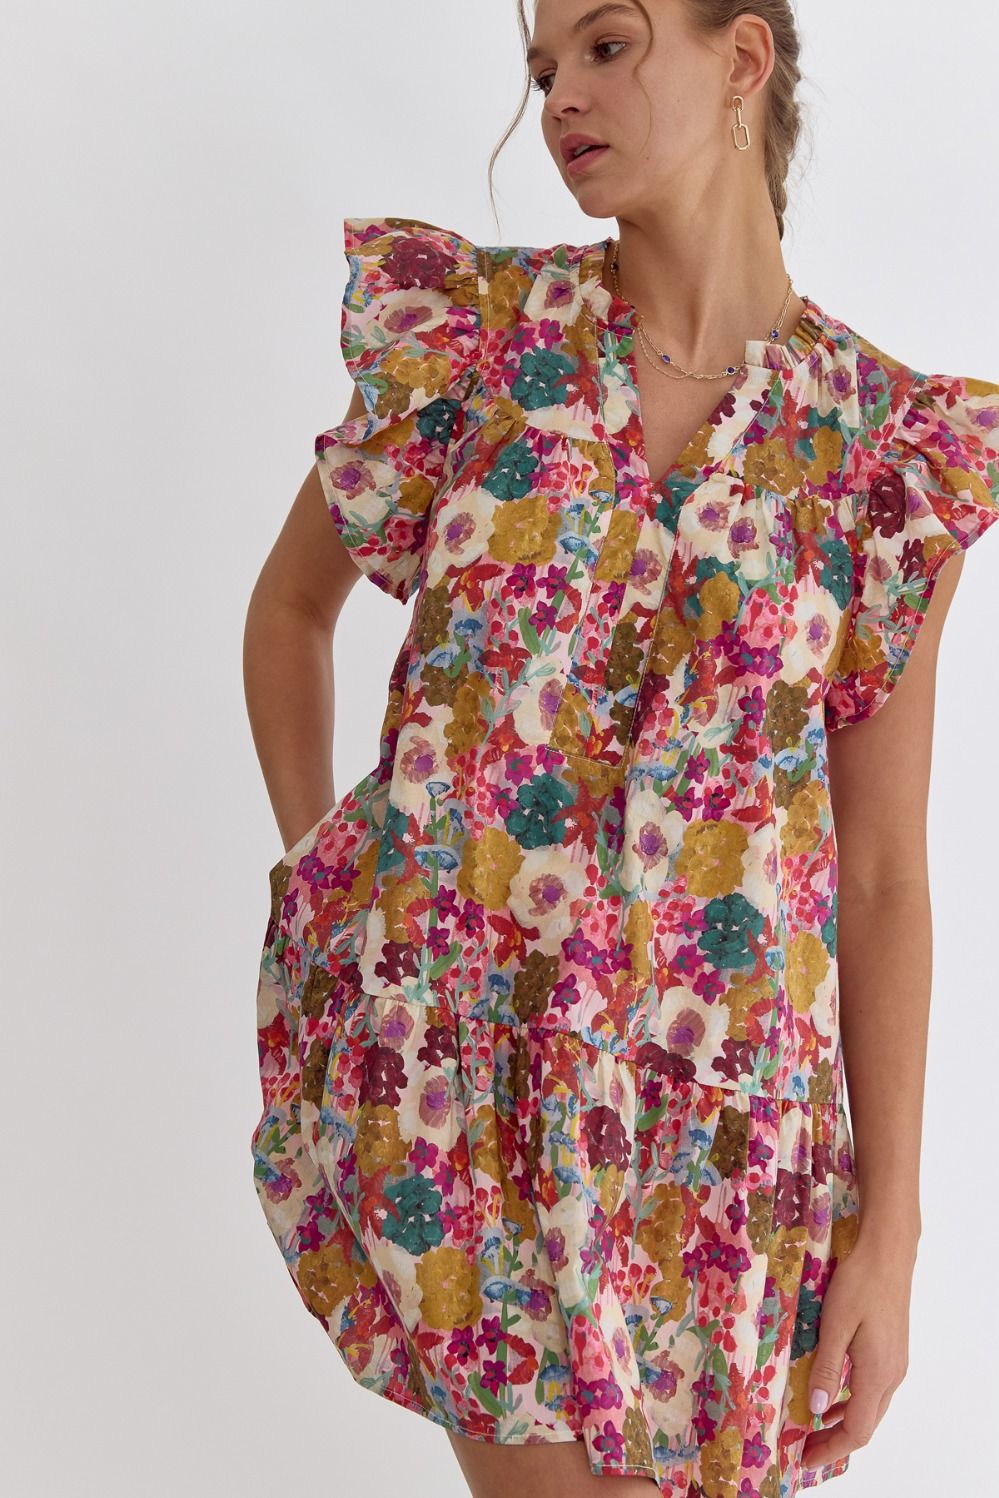 Fuchsia Floral Print Dress